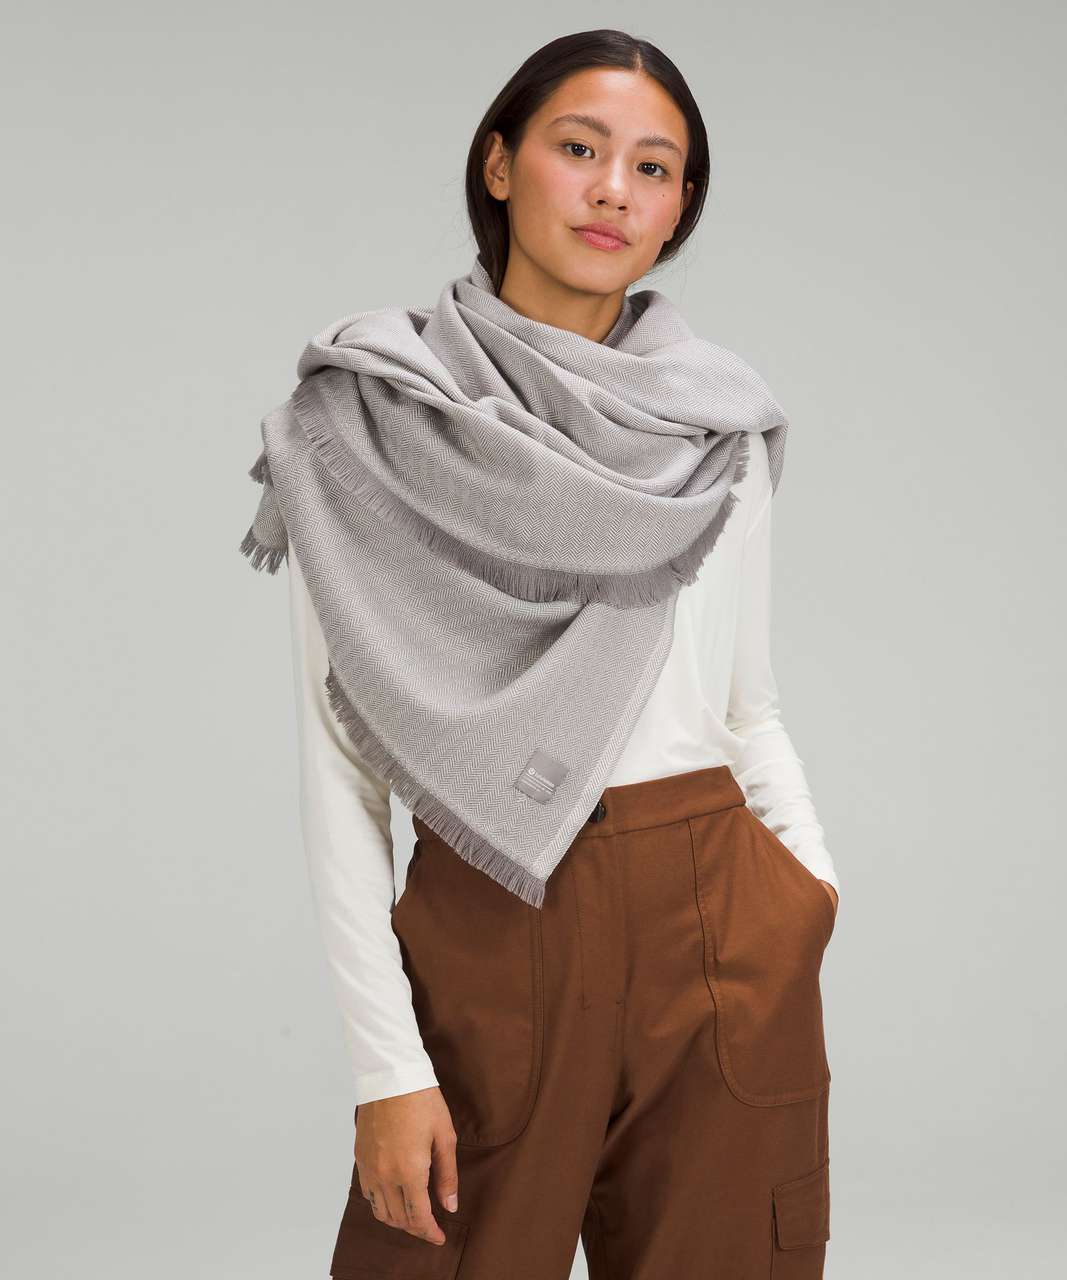 https://storage.googleapis.com/lulu-fanatics/product/77676/1280/lululemon-wool-blanket-scarf-gull-grey-white-opal-058928-413390.jpg